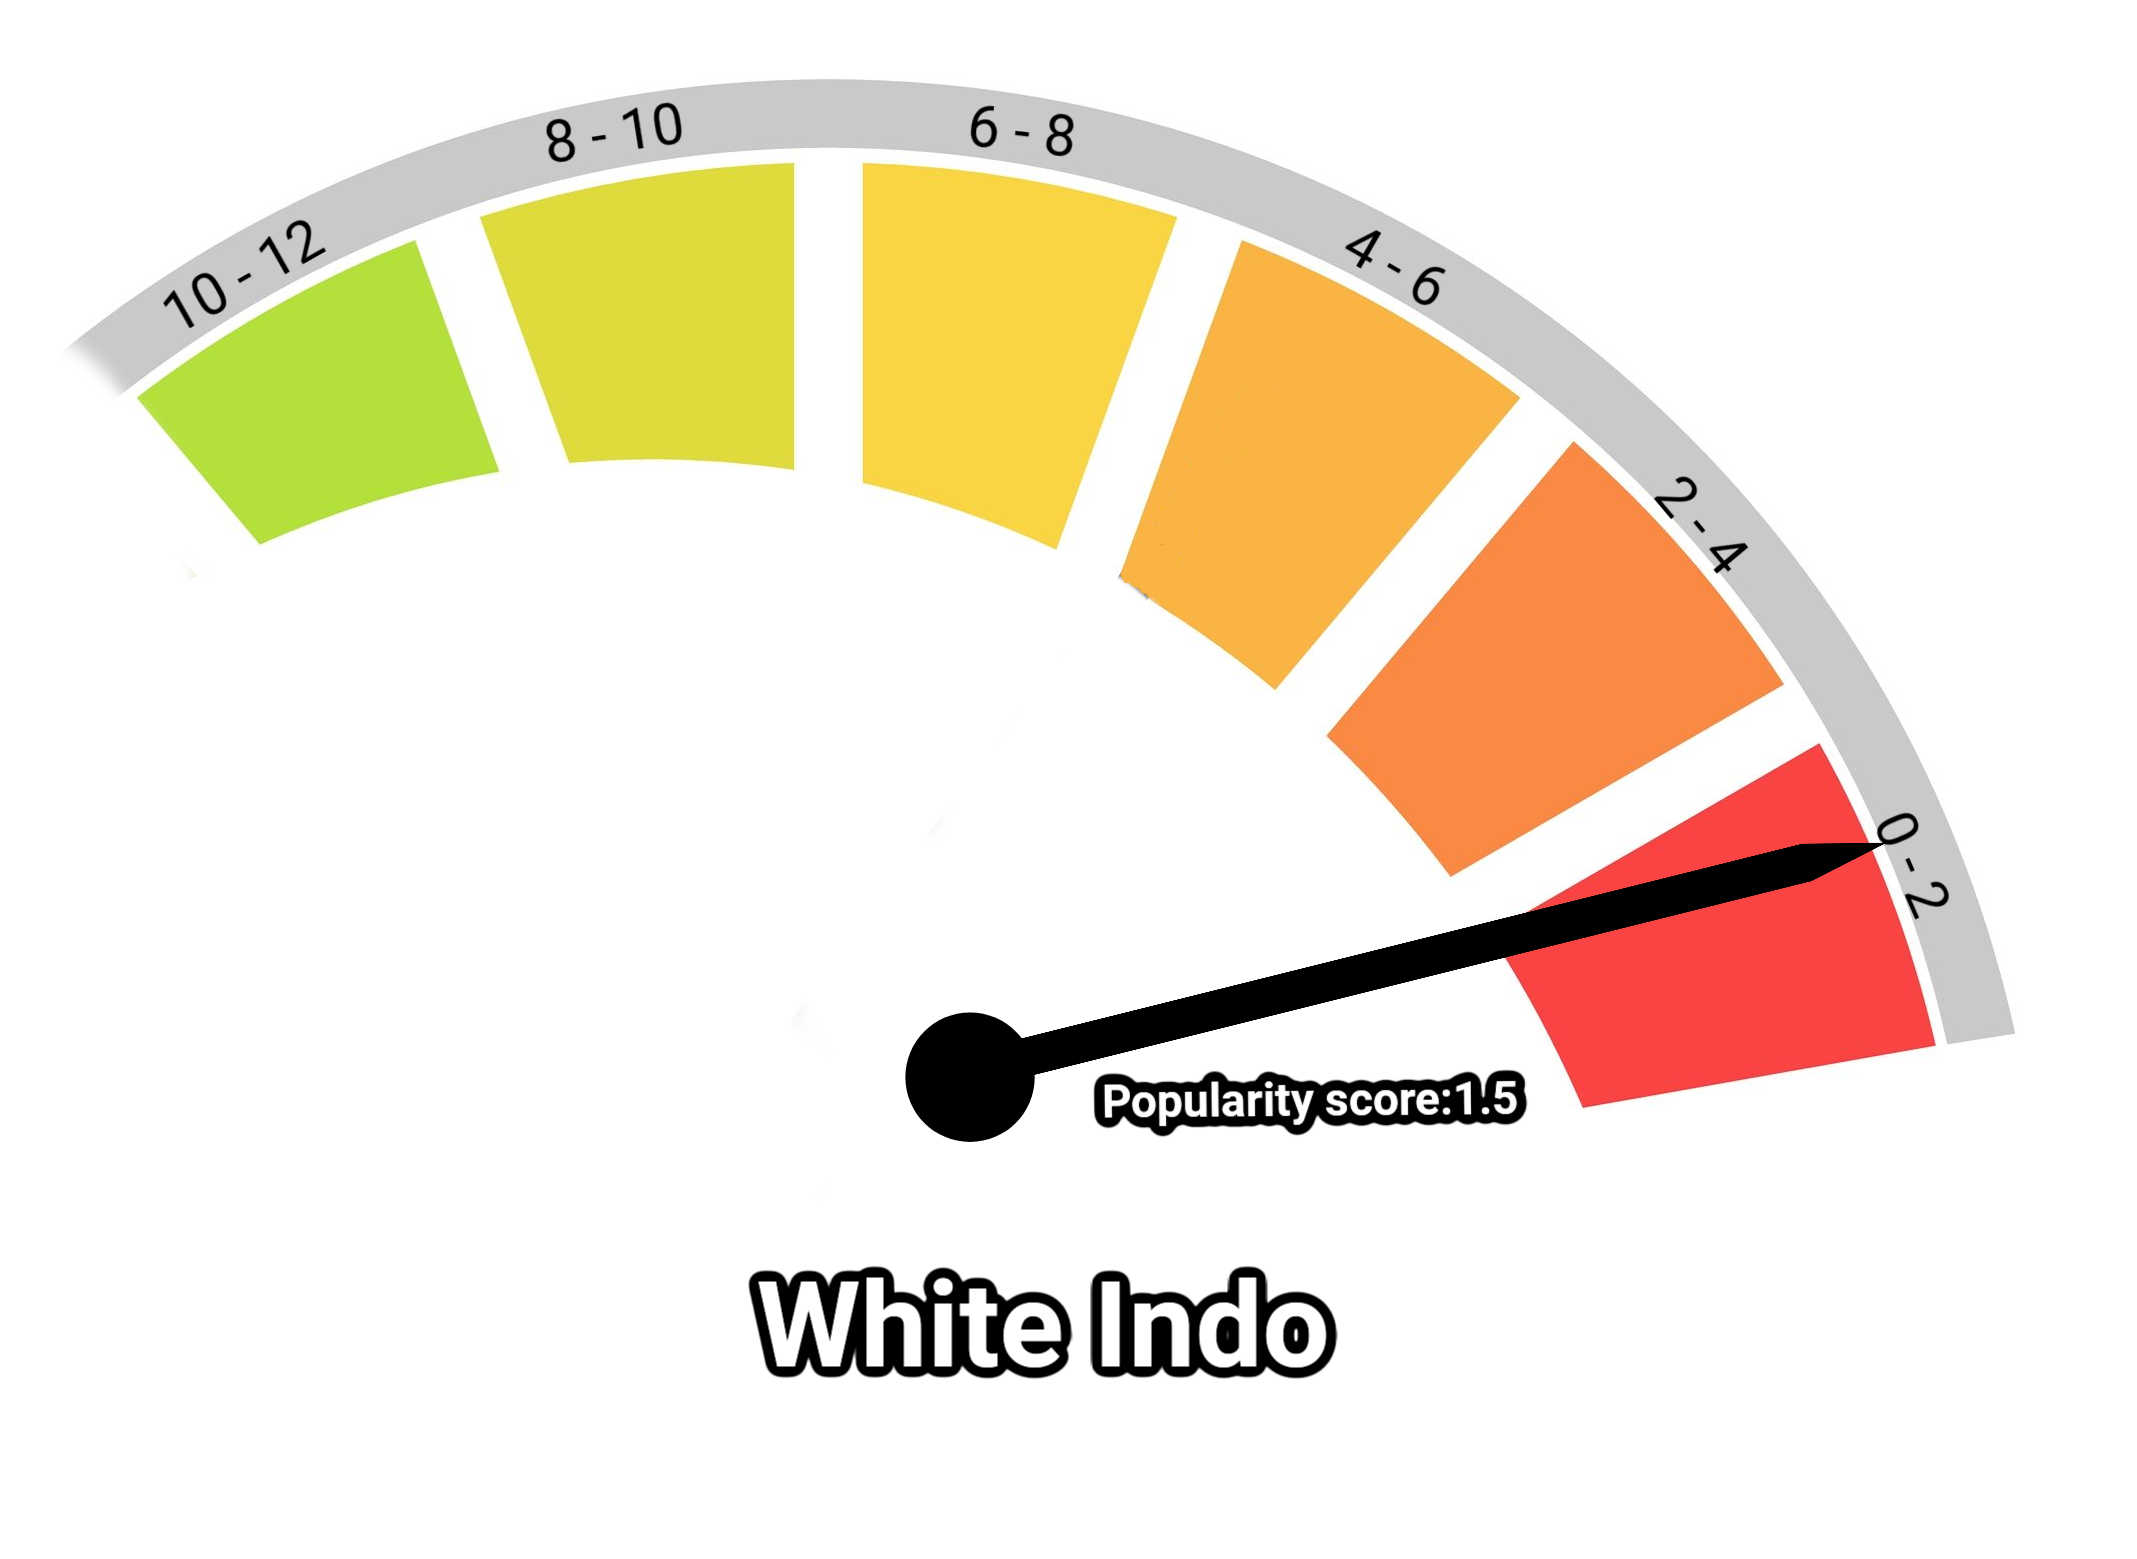 image of white indo kratom popularity score